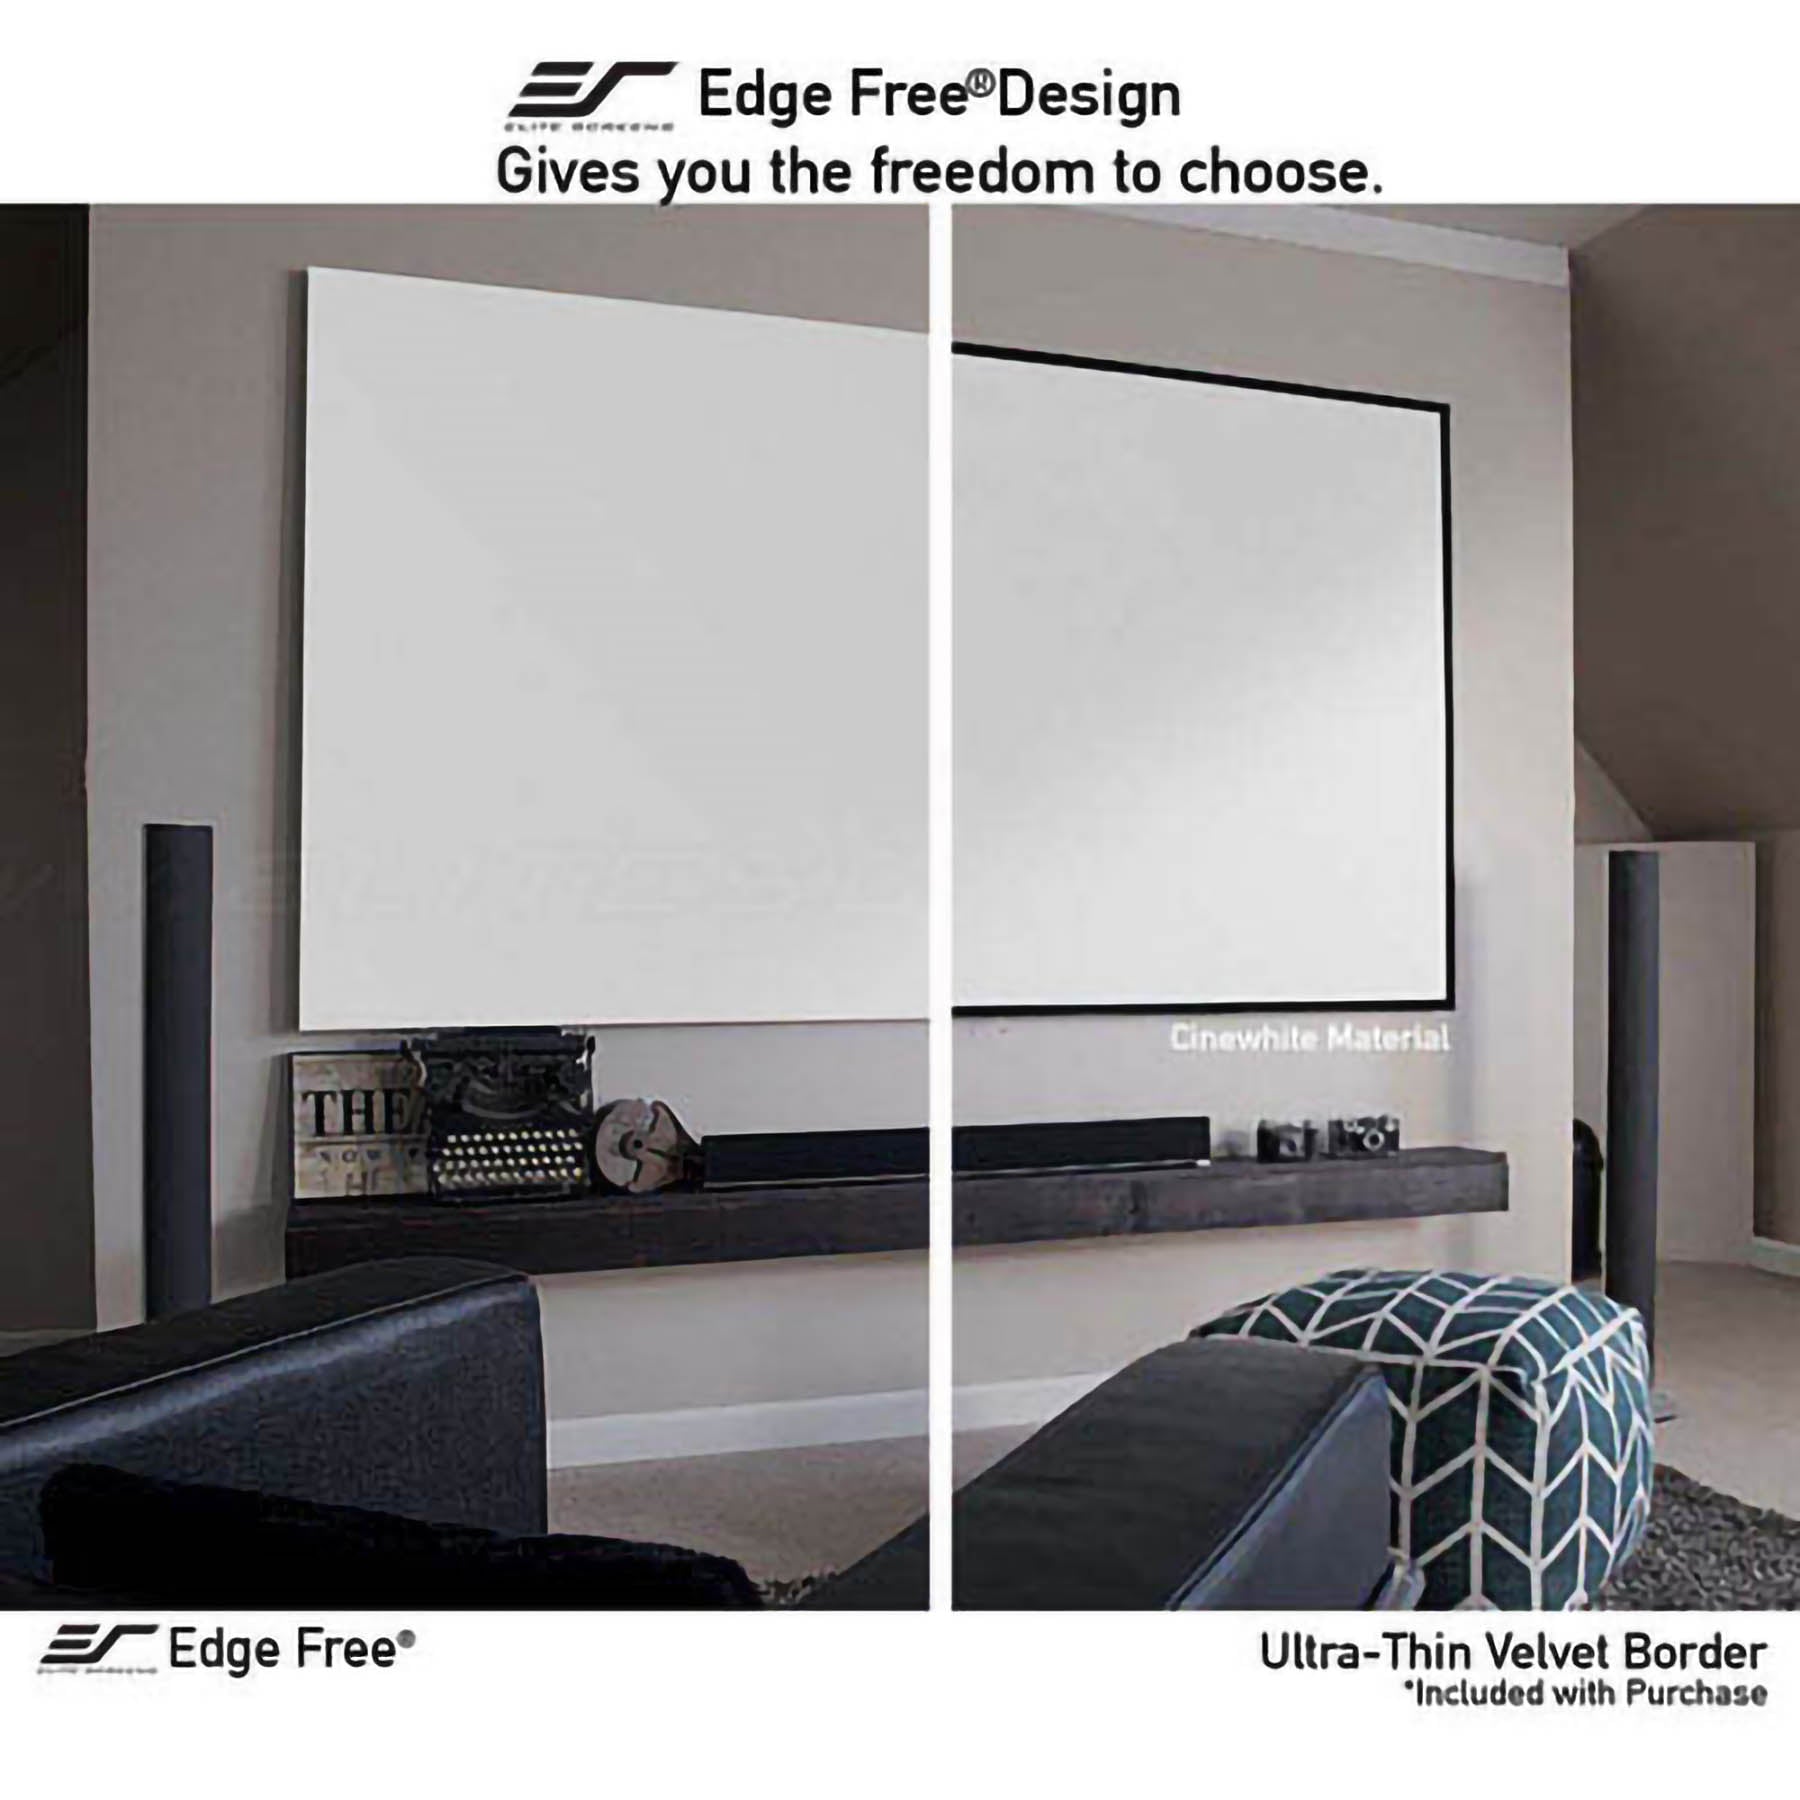 Elite Screens AR110WH2 Aeon Series 110" 16:9 4K Fixed Screen with EDGE FREE Frame